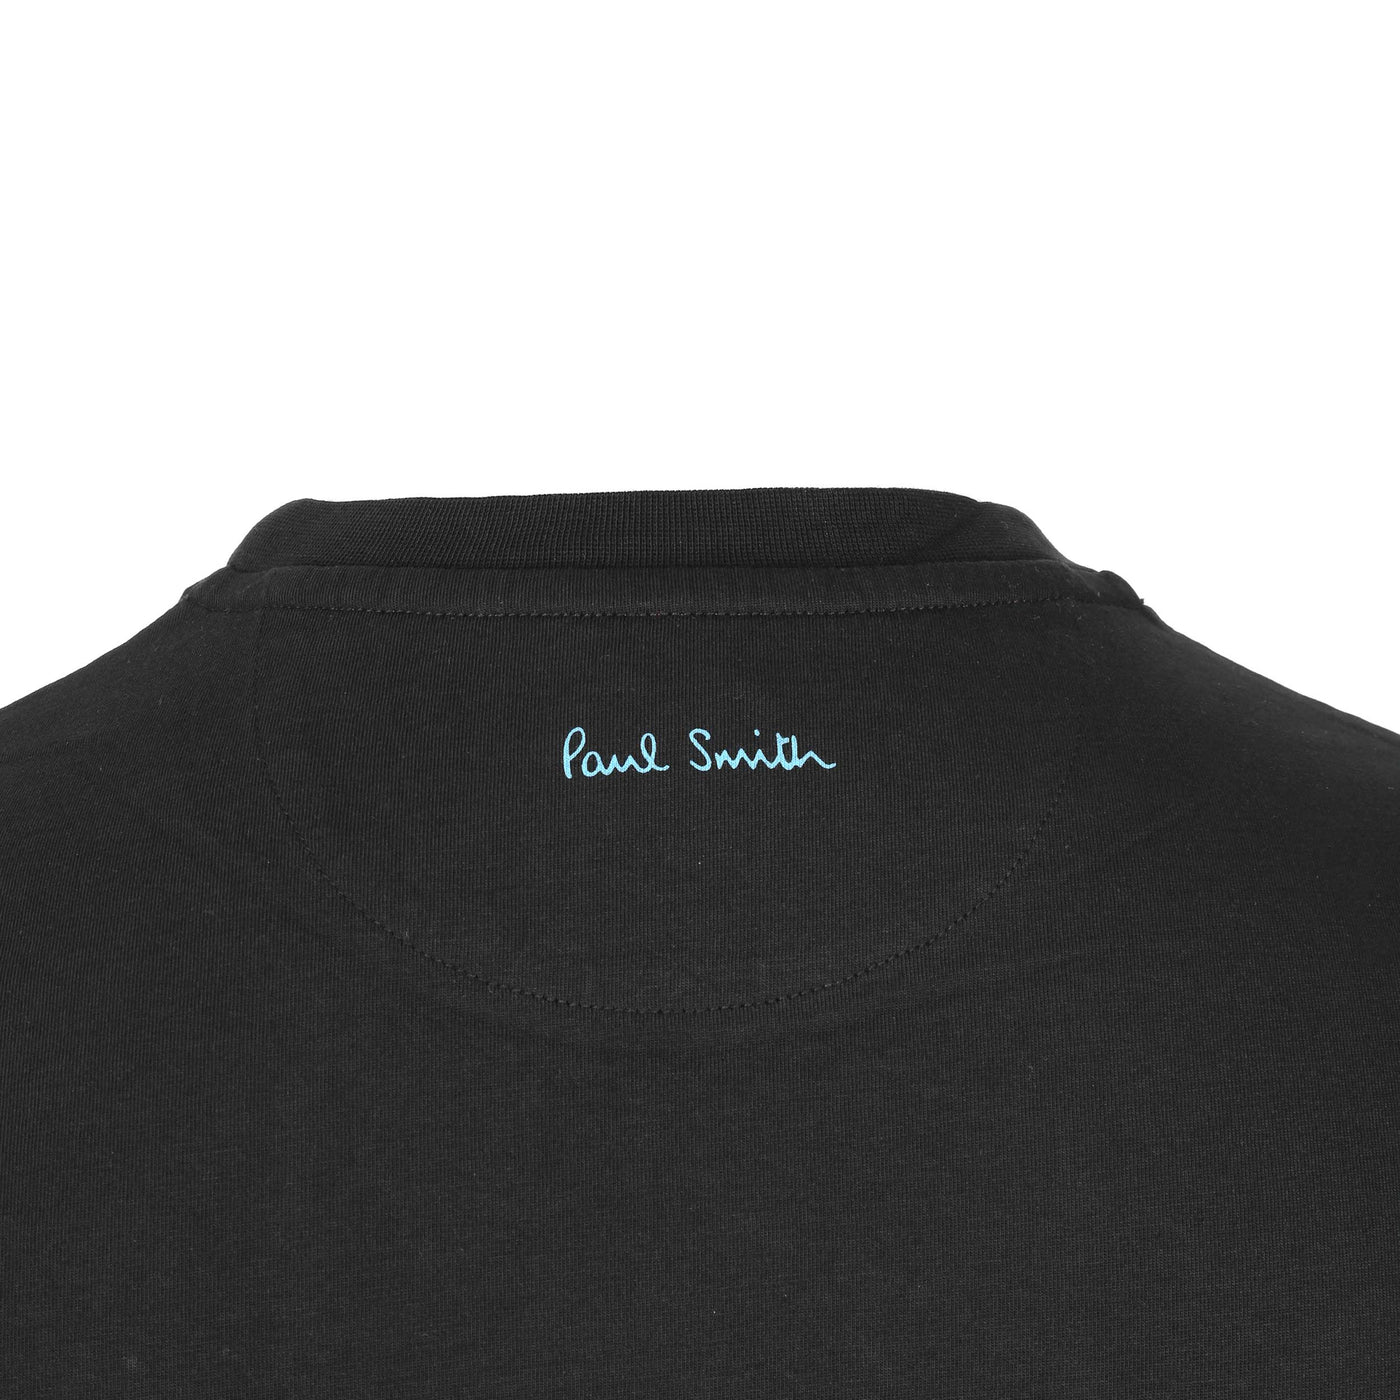 Paul Smith Flower Print T Shirt in Black